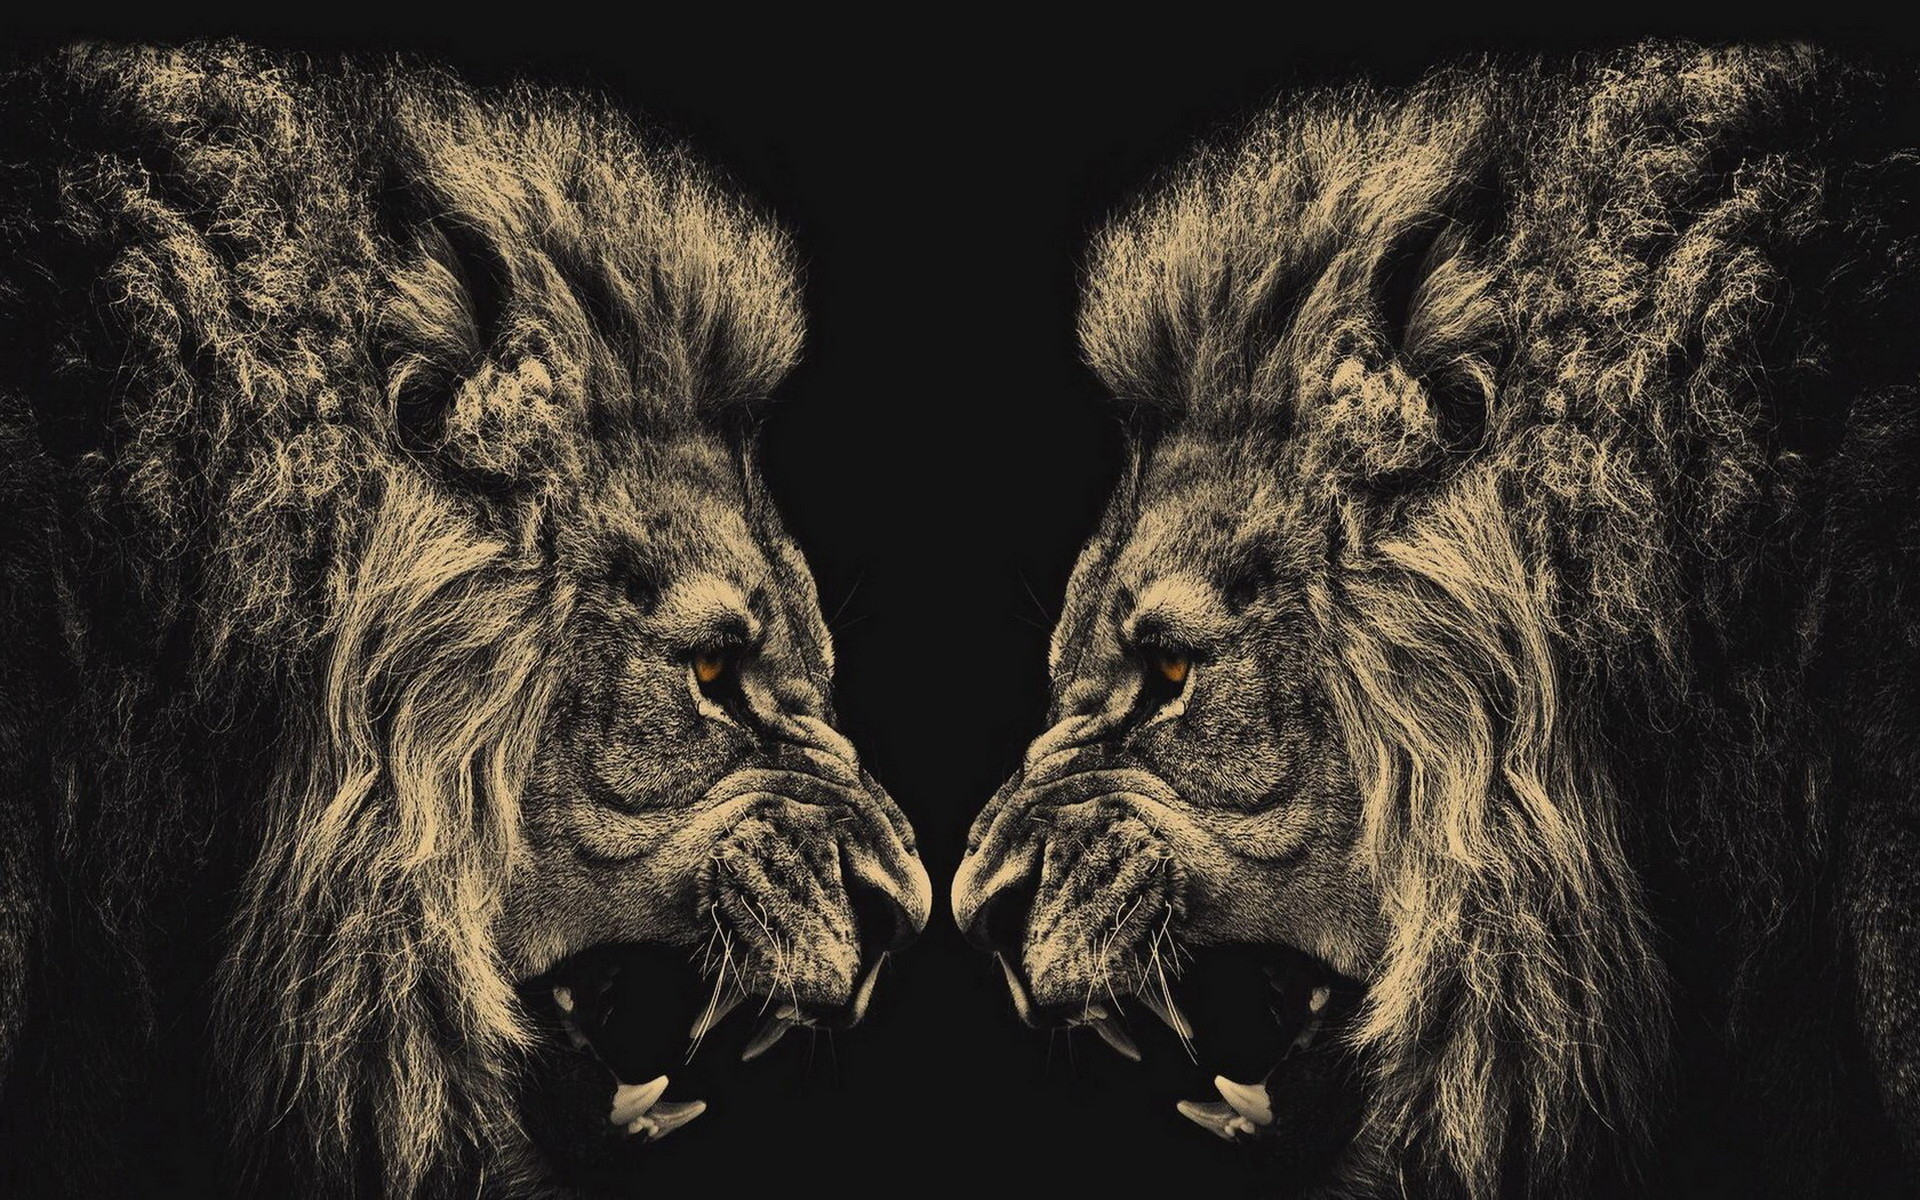 Lion Wallpapers High Resolution For Desktop Wallpaper 1920 x 1200 px 692.31  KB roar angry black